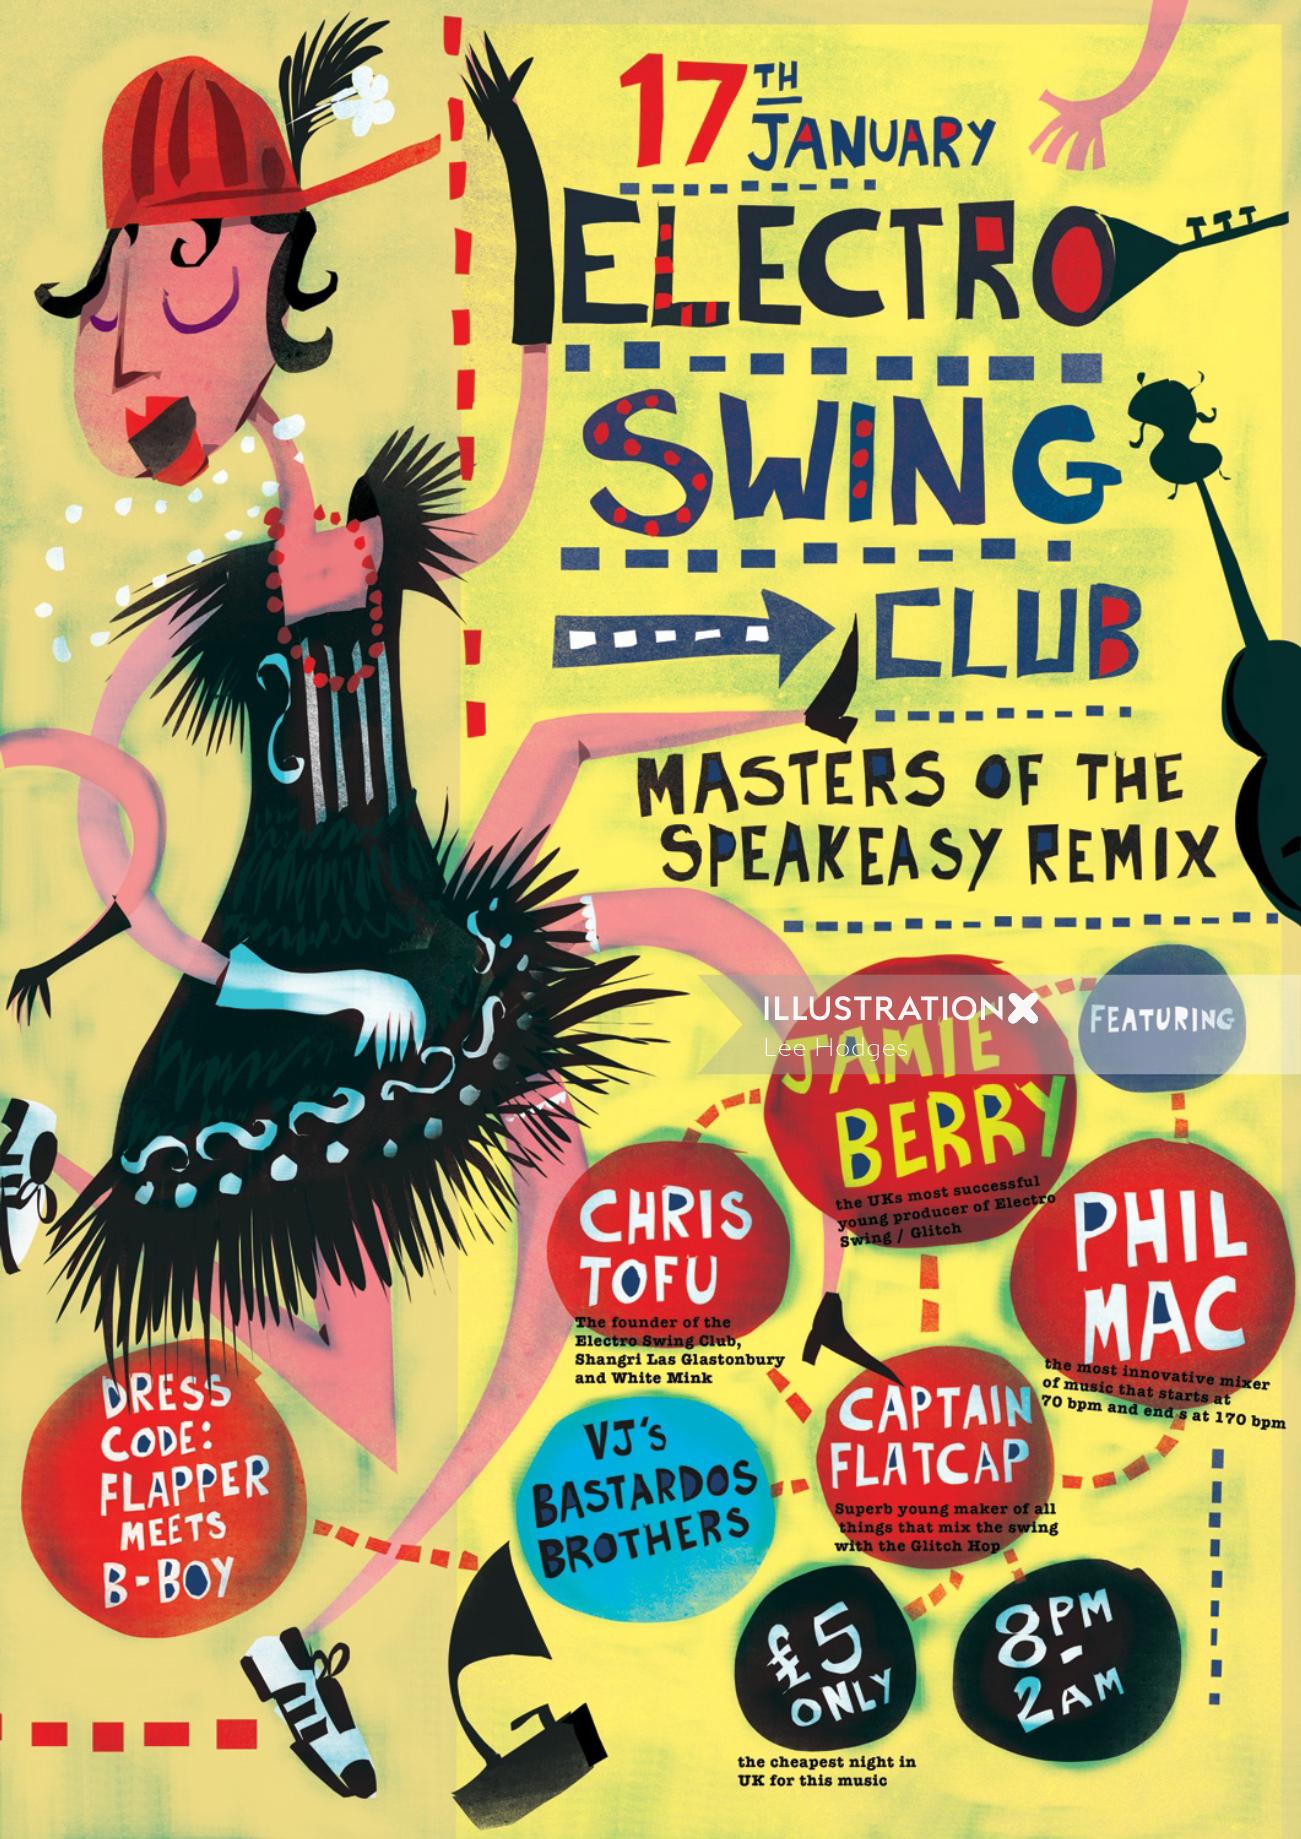 Arte do cartaz retrô do cartaz do clube Electro Swing